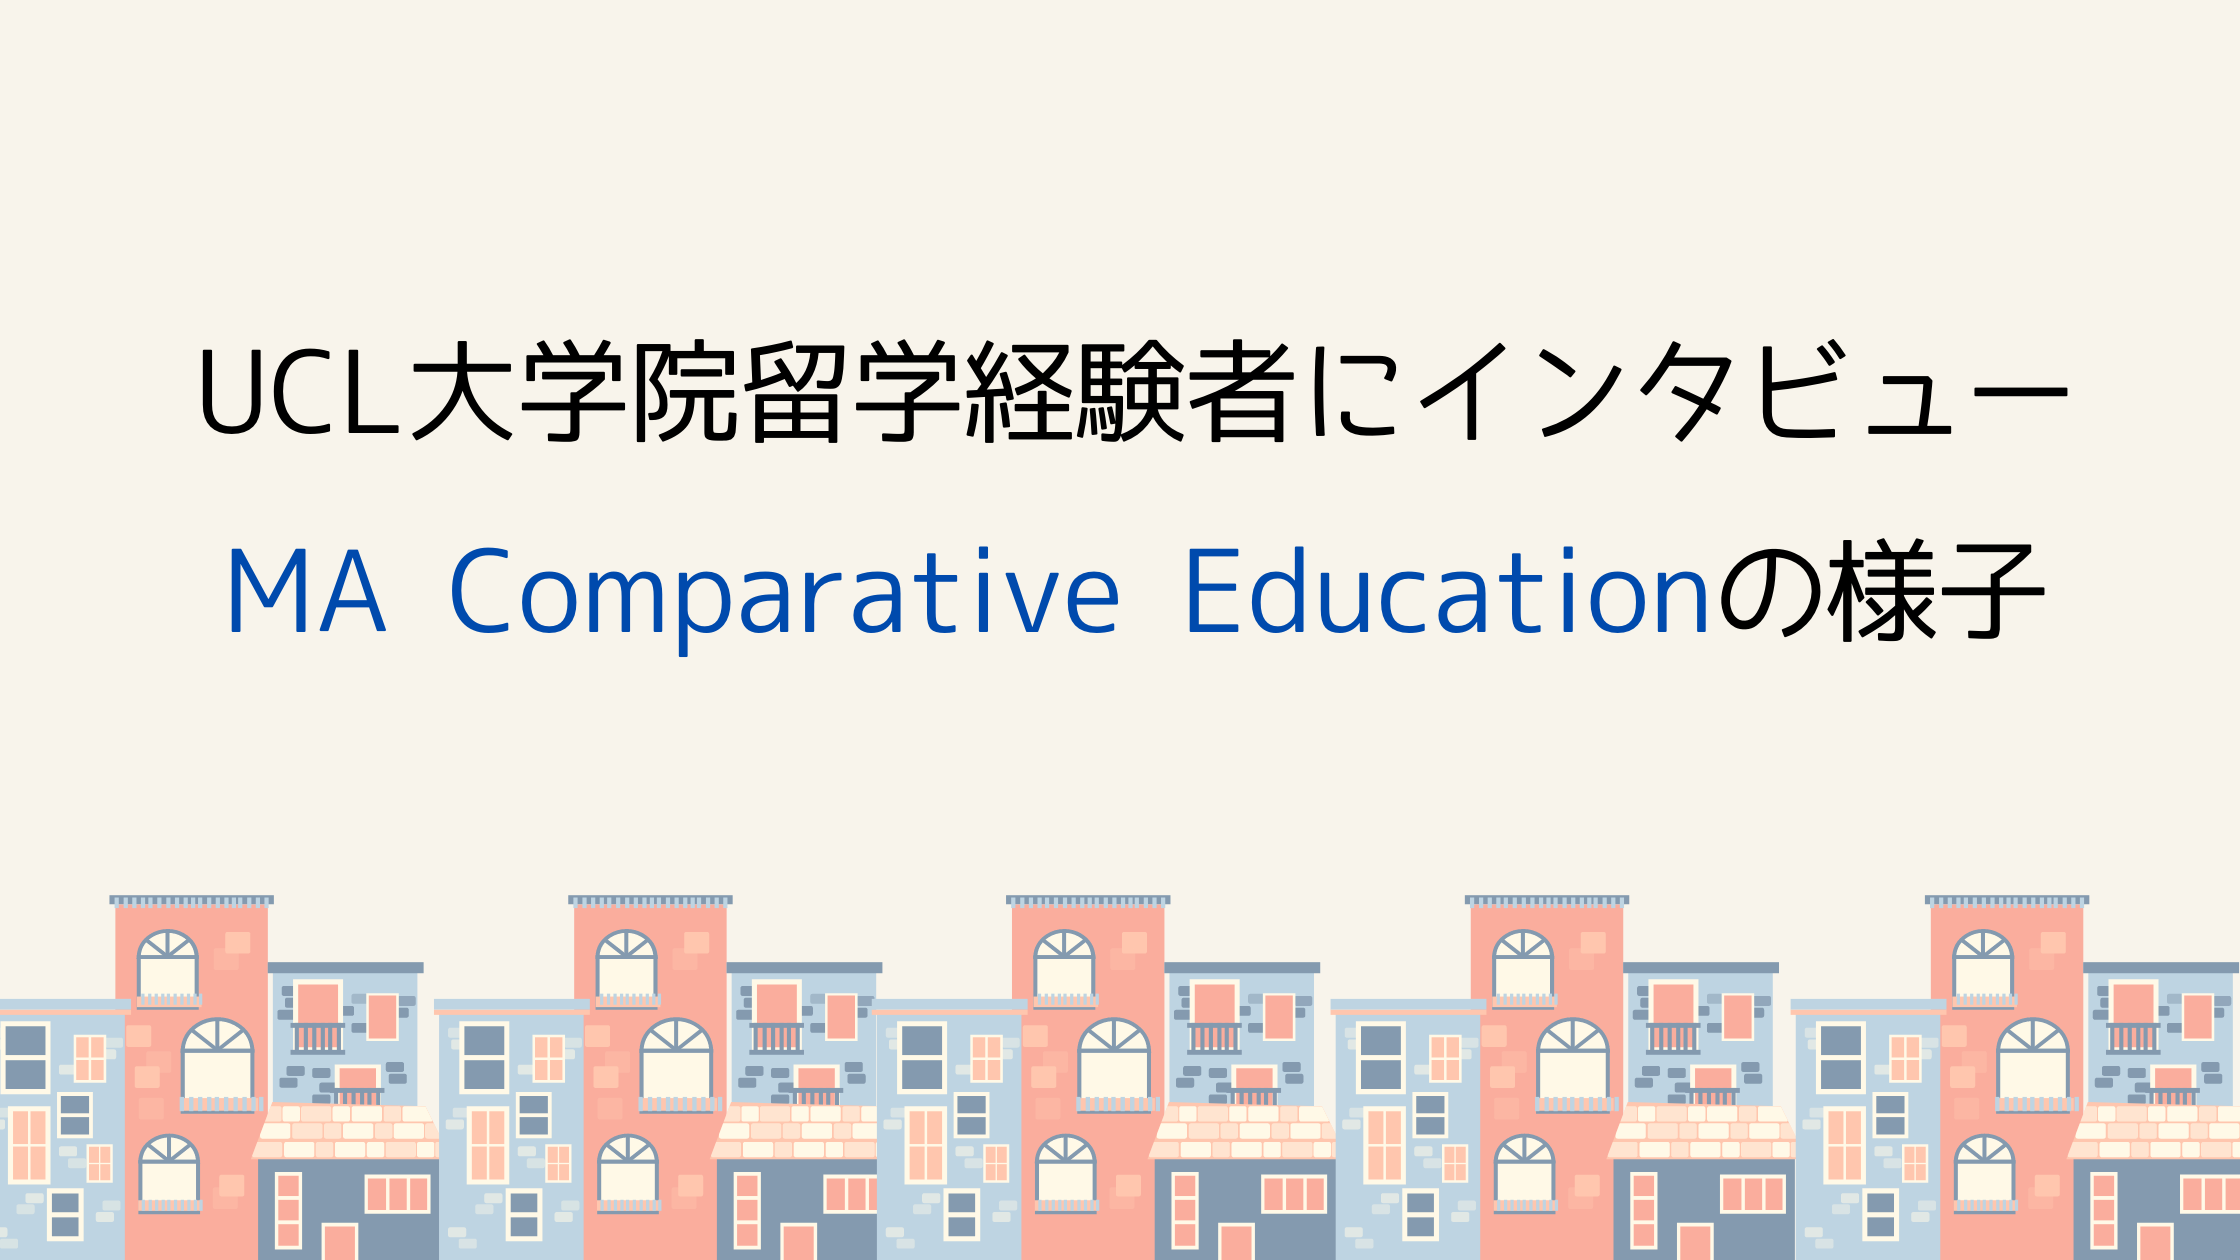 ucl ma comparative education